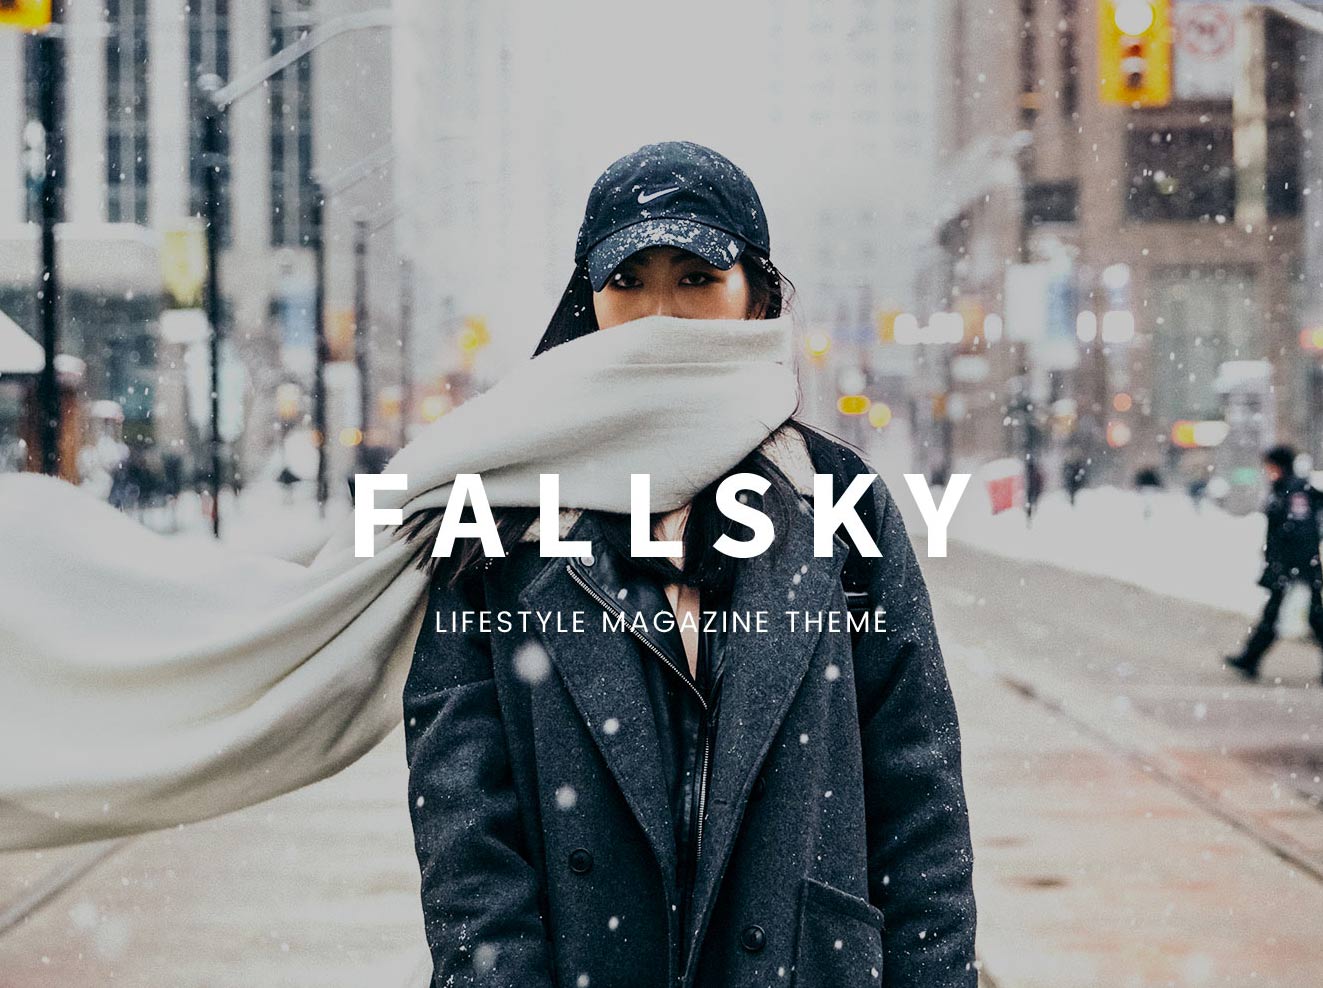 “Fallsky